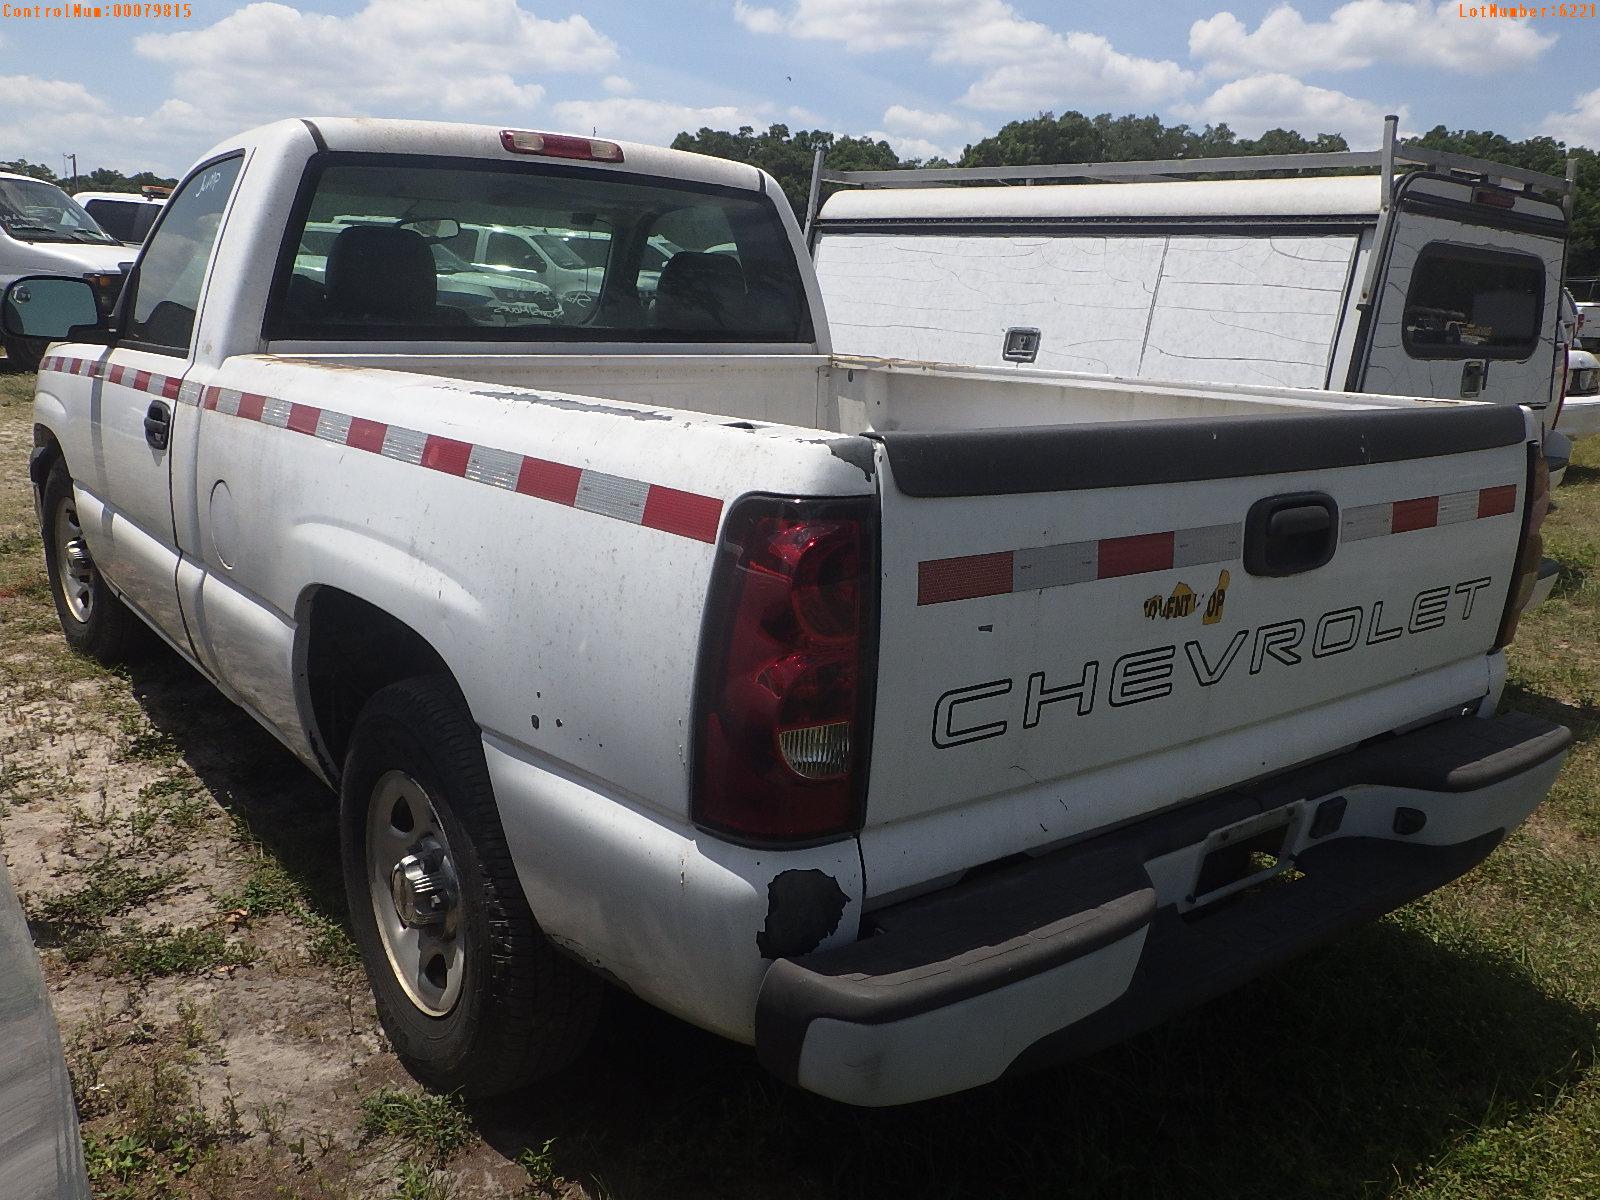 5-06221 (Trucks-Pickup 2D)  Seller: Florida State D.O.T. 2004 CHEV SILVERADO